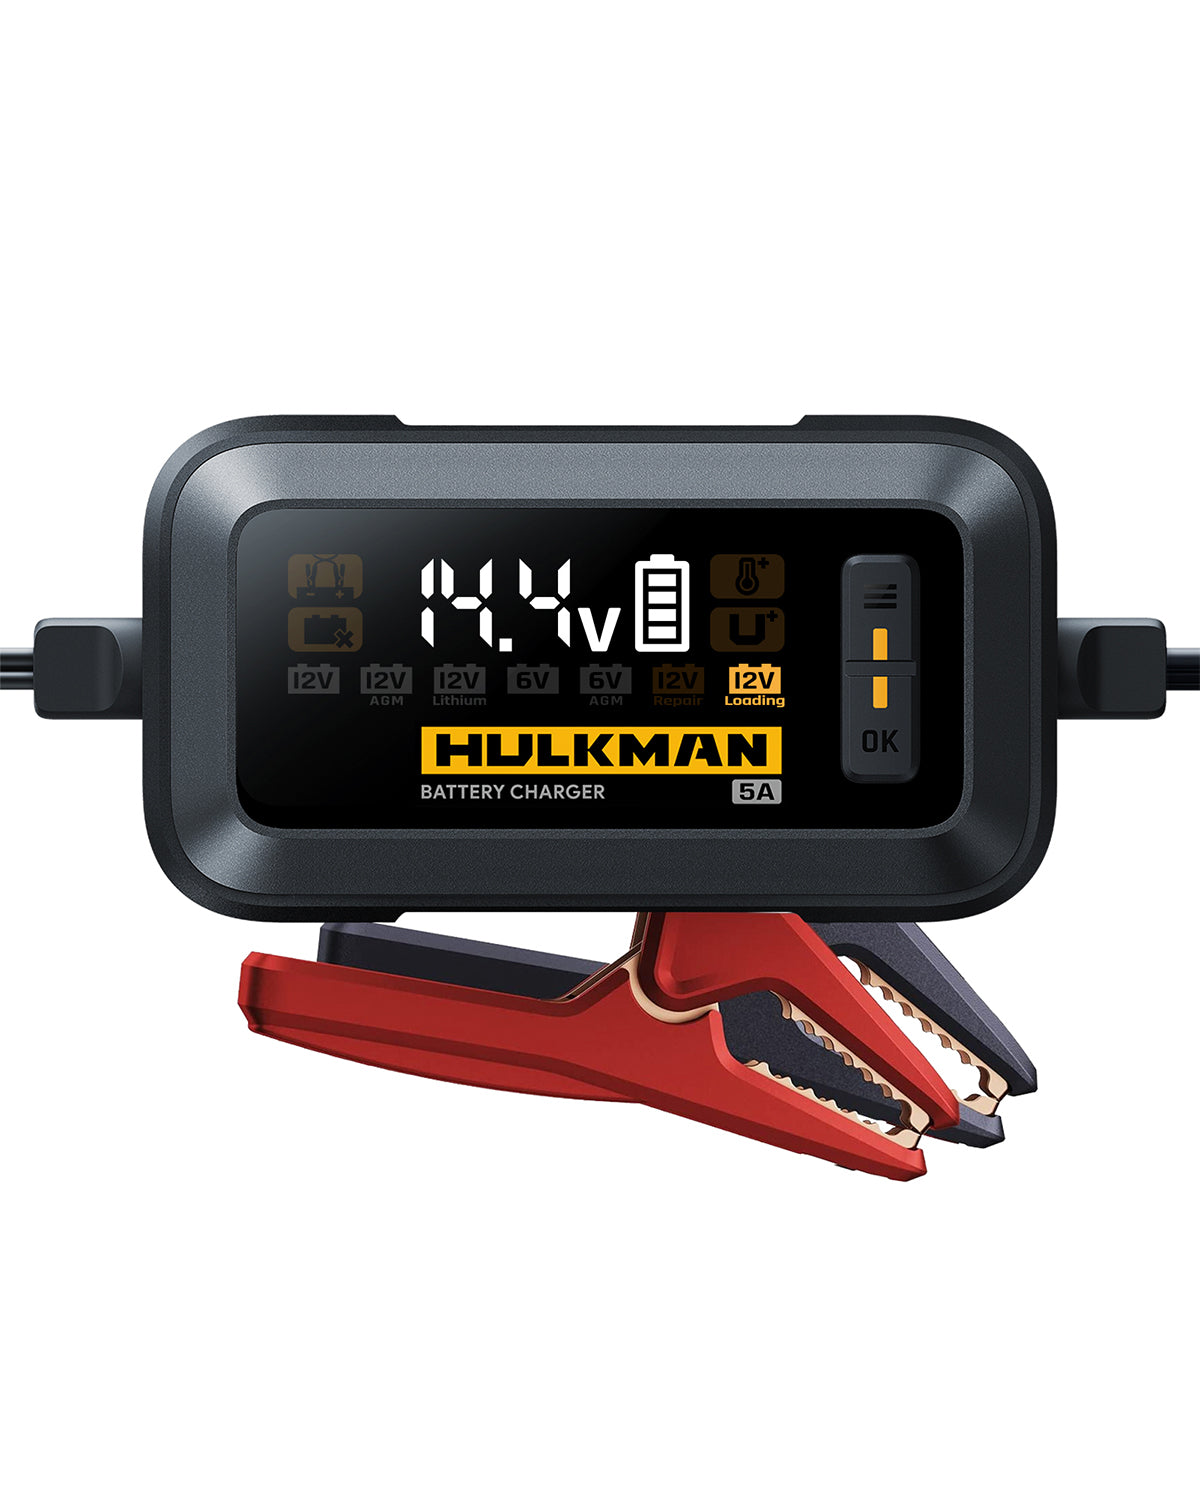 HULKMAN Sigma 1 Car Battery Charger, 1A 6V/12V Automatic Smart Trickle